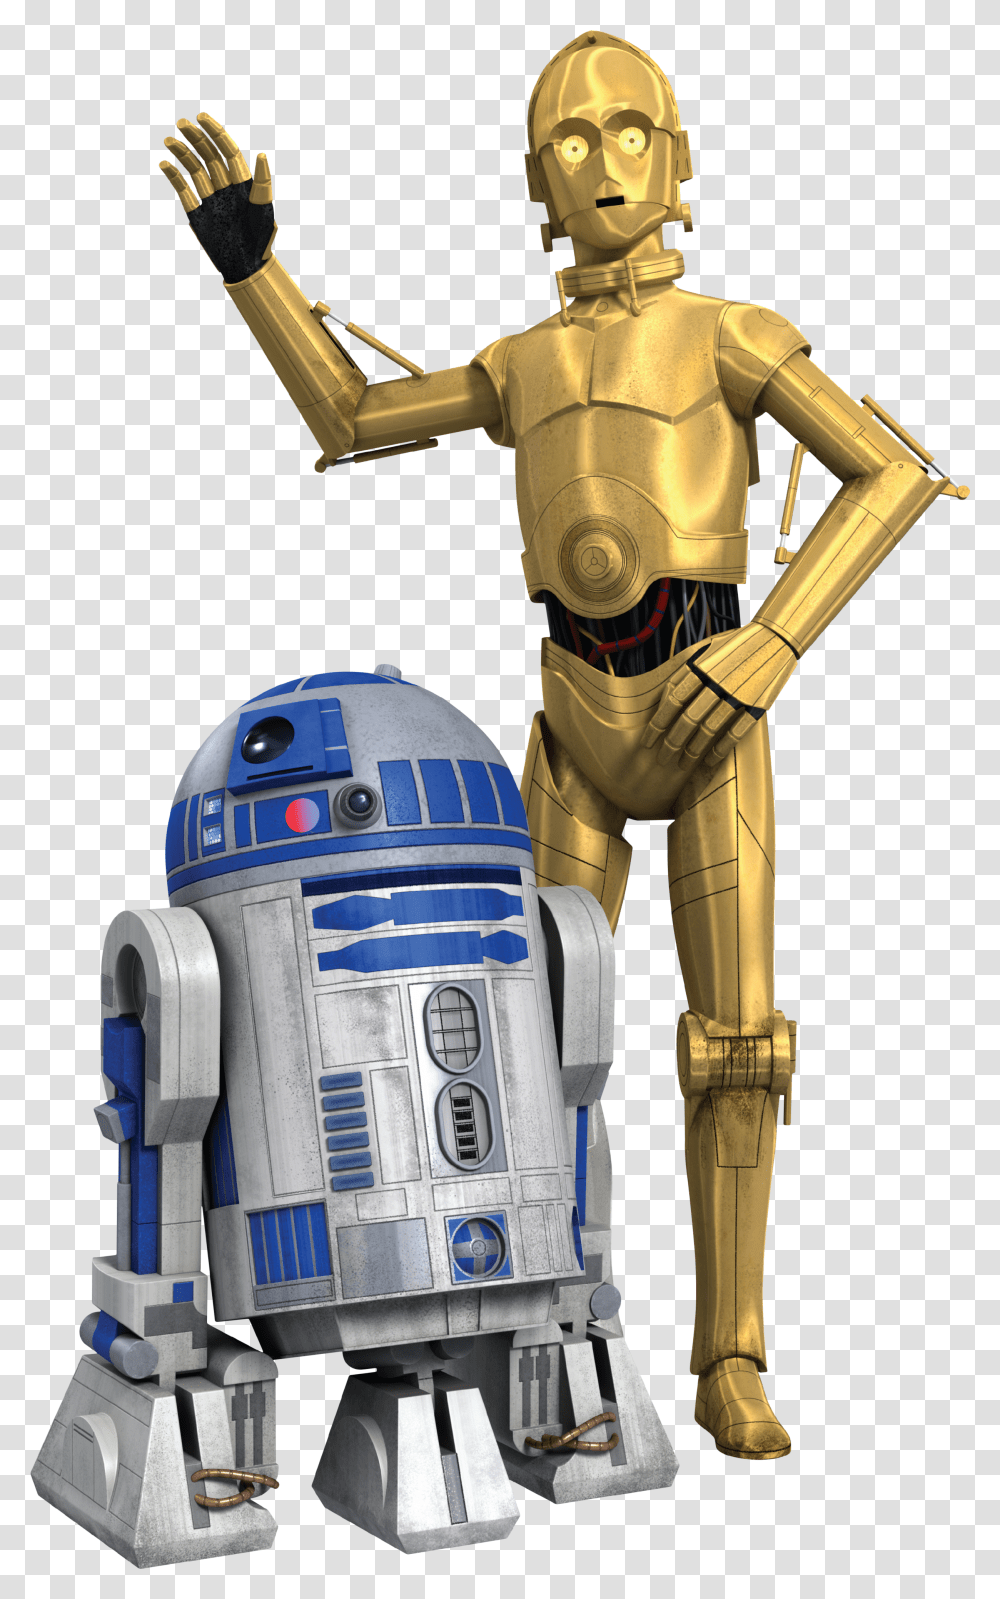 Download Rebels R2 D2 And C 3po Star Wars Rebels R2d2 Star Wars Rebels C3po Transparent Png